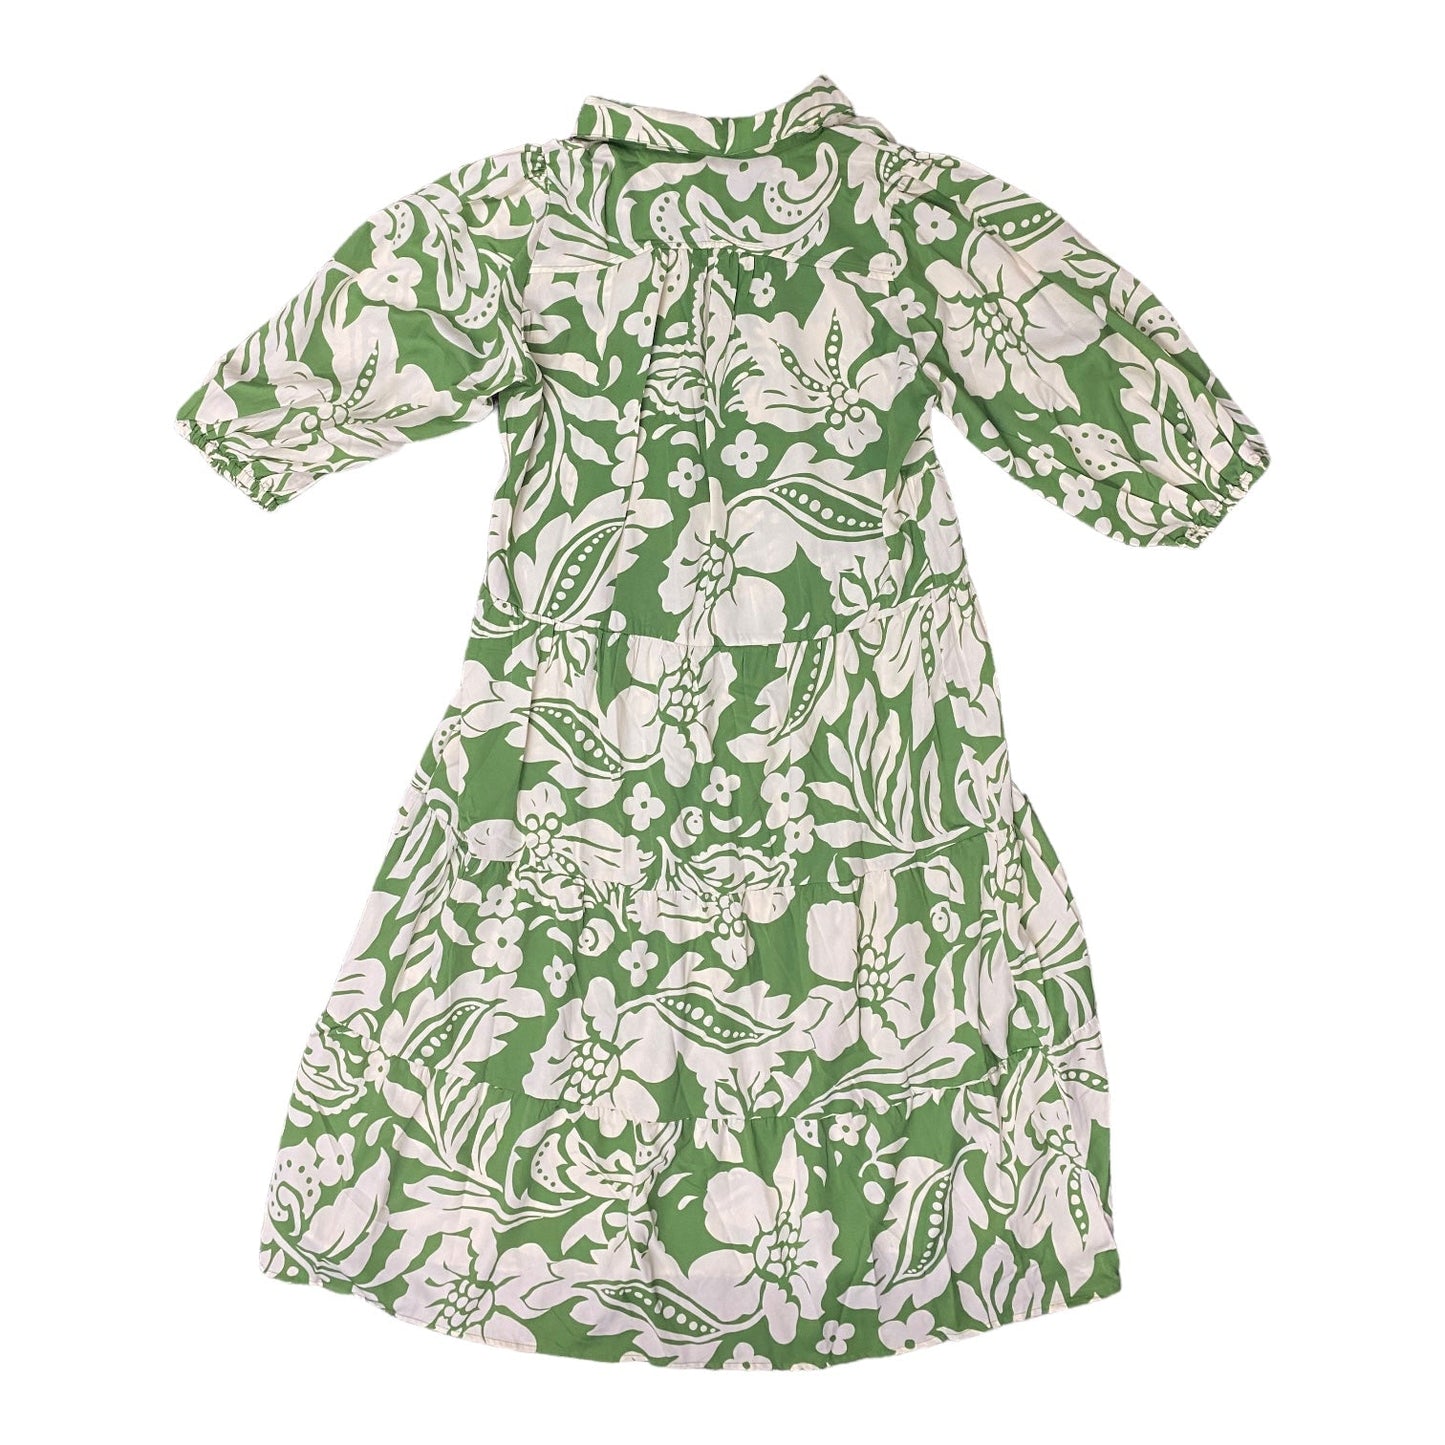 Green & Tan Dress Casual Maxi Umgee, Size M